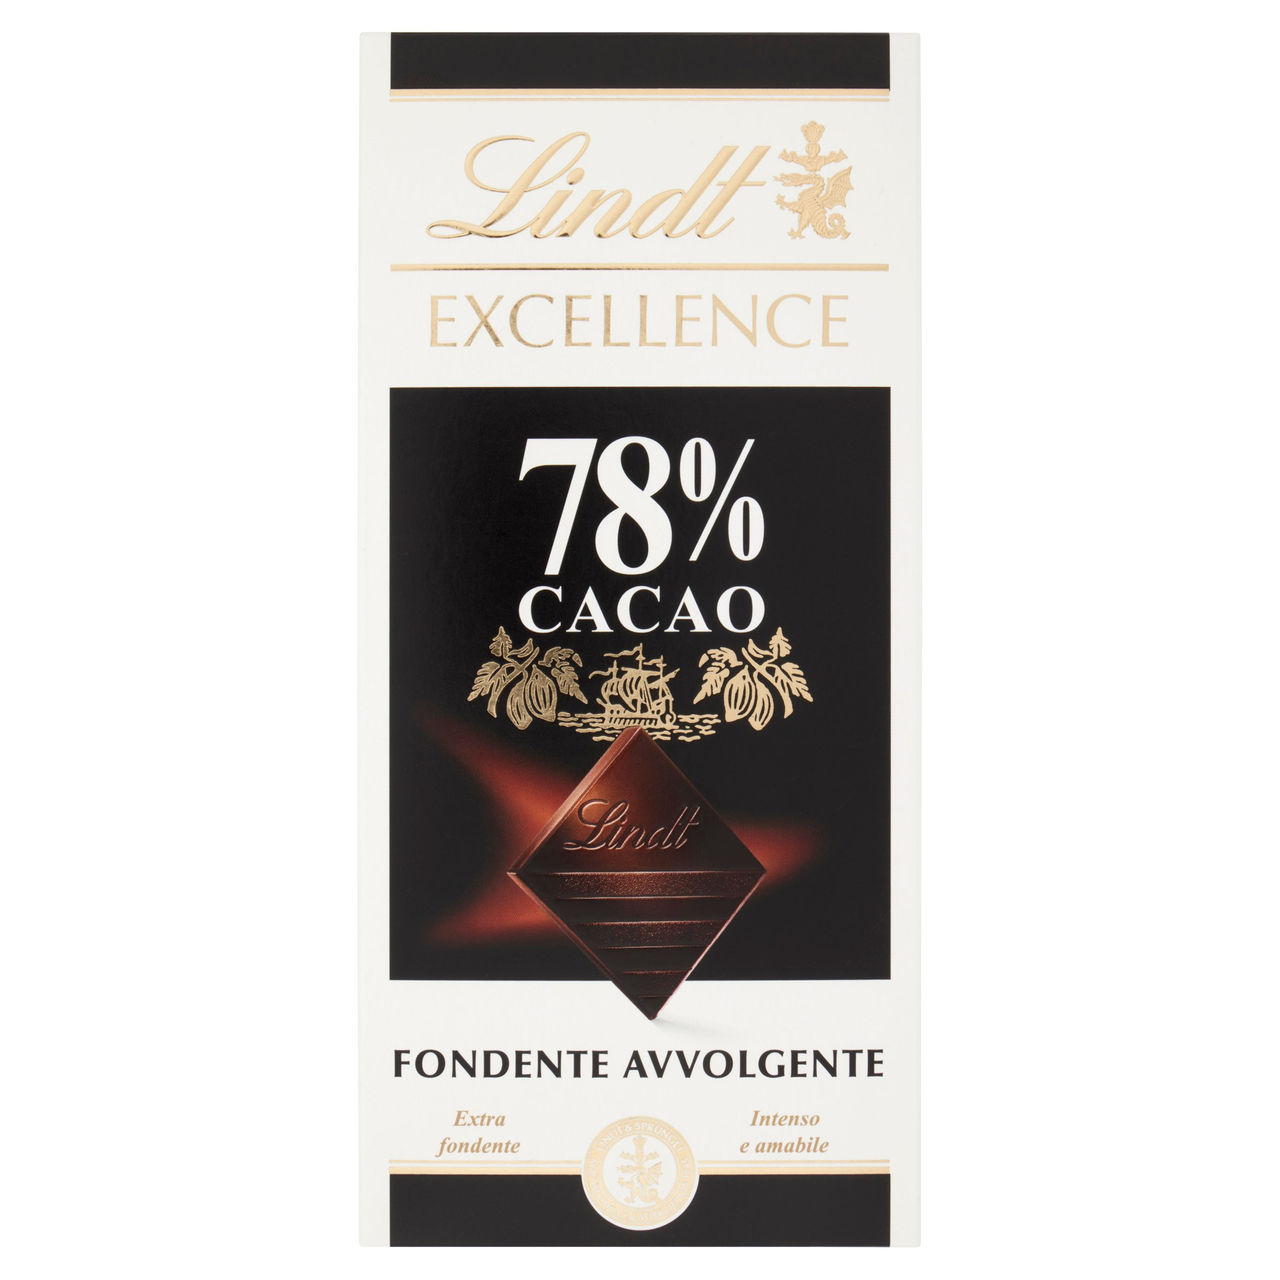 Lindt Excellence 78% Cacao Cioccolato 100 g online